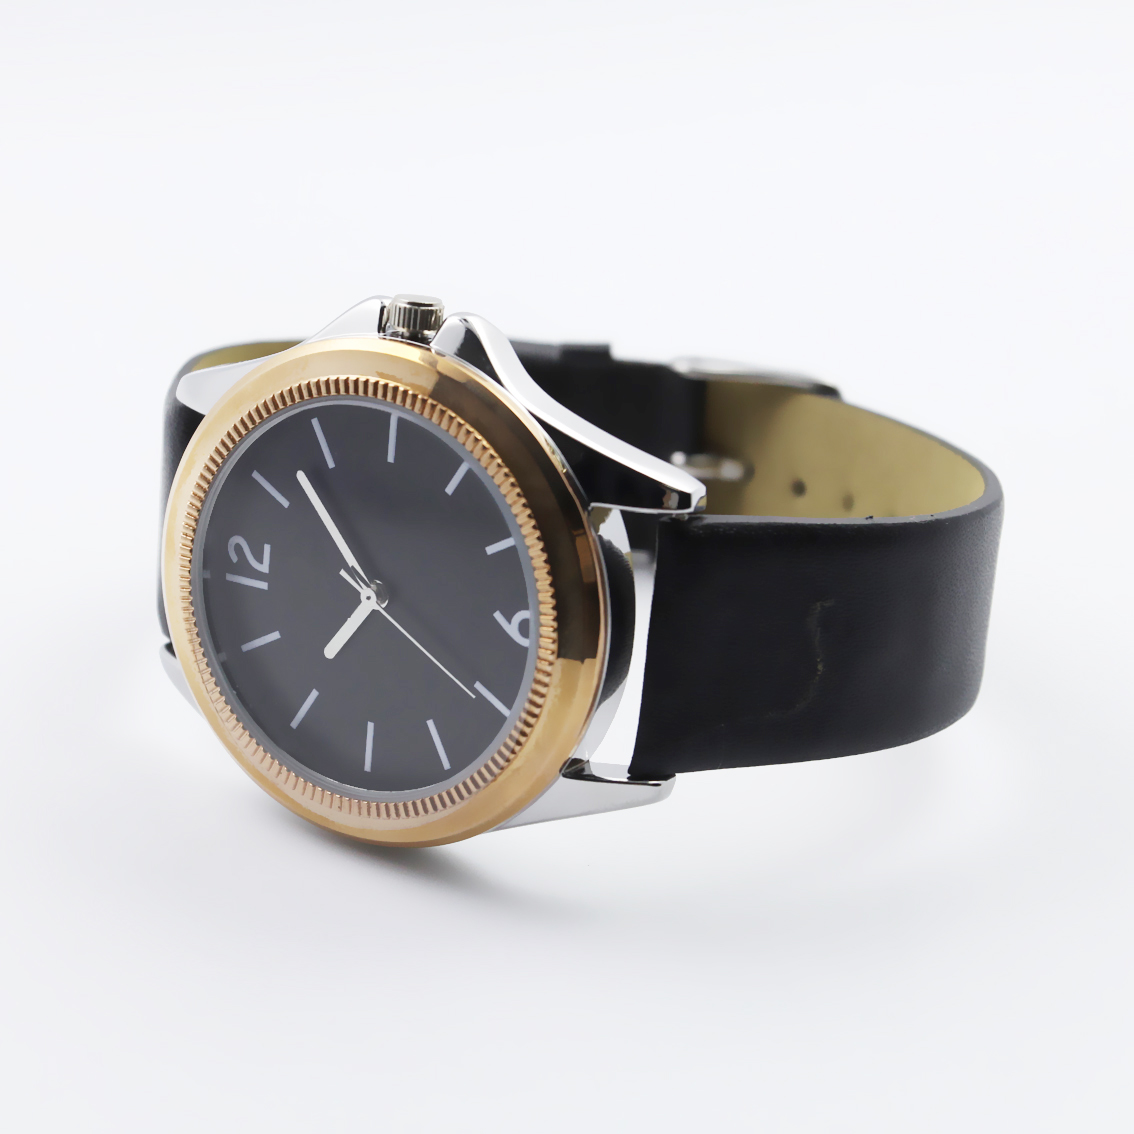 #02031Men's wristwatch quartz analog leather strap watch